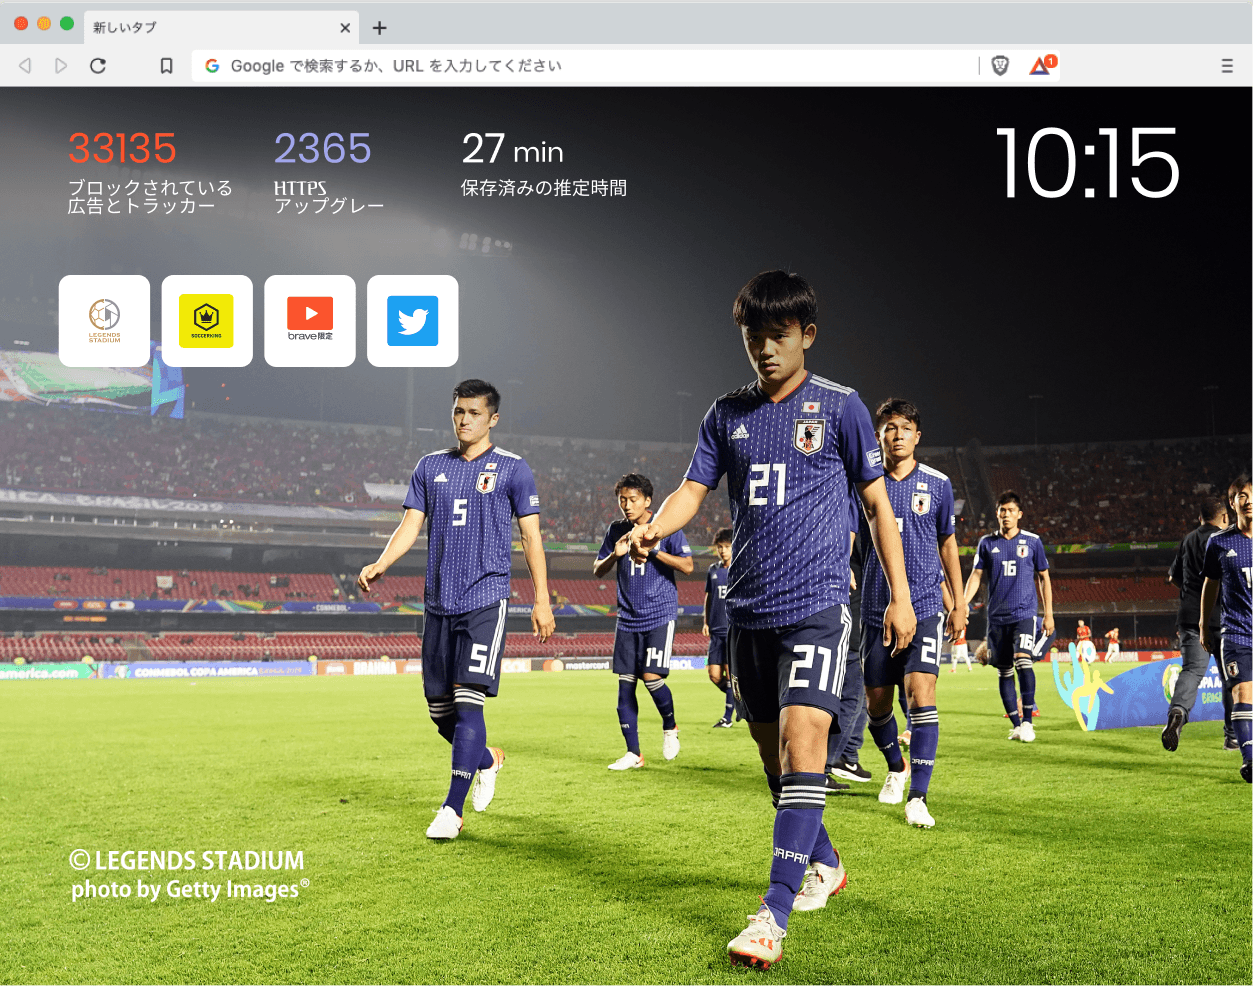 Legend Stadium on Brave desktop's new tab page